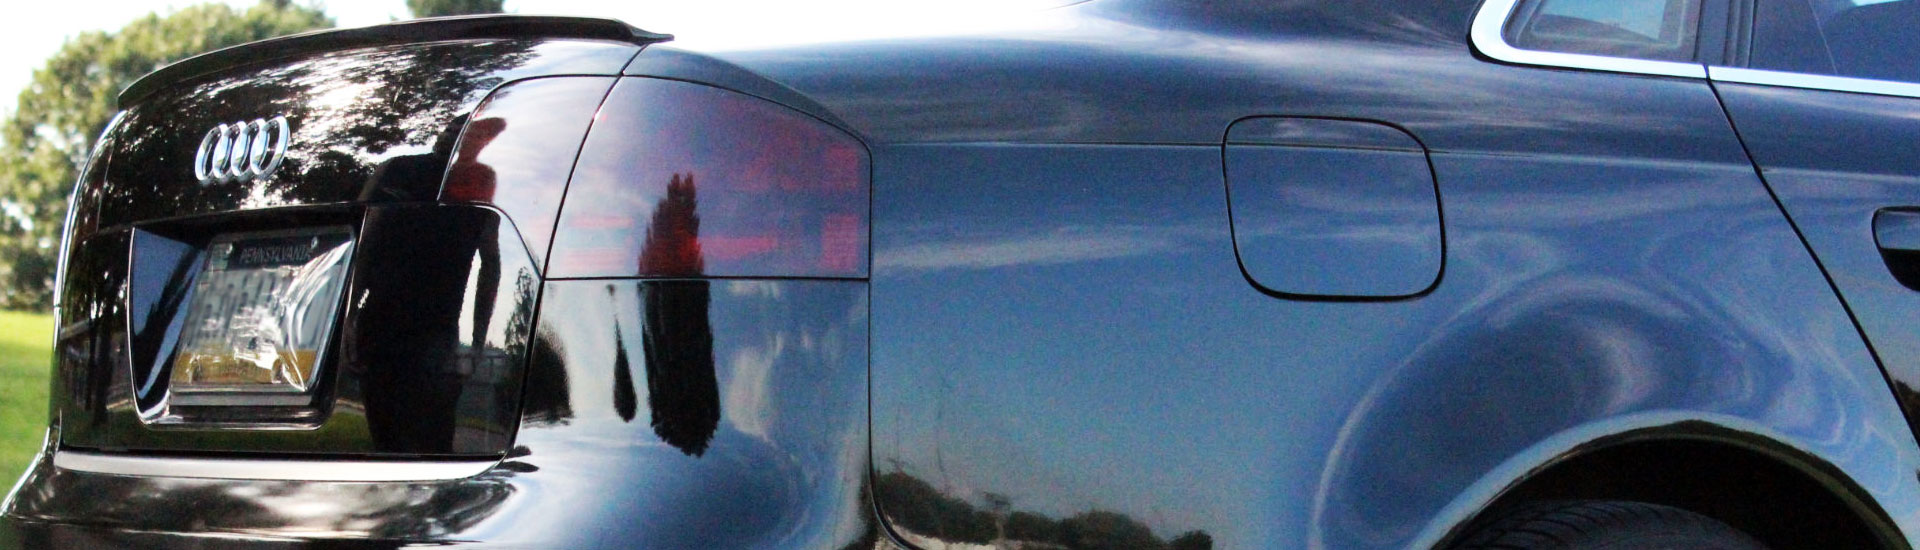 Audi Tail Light Tint Covers